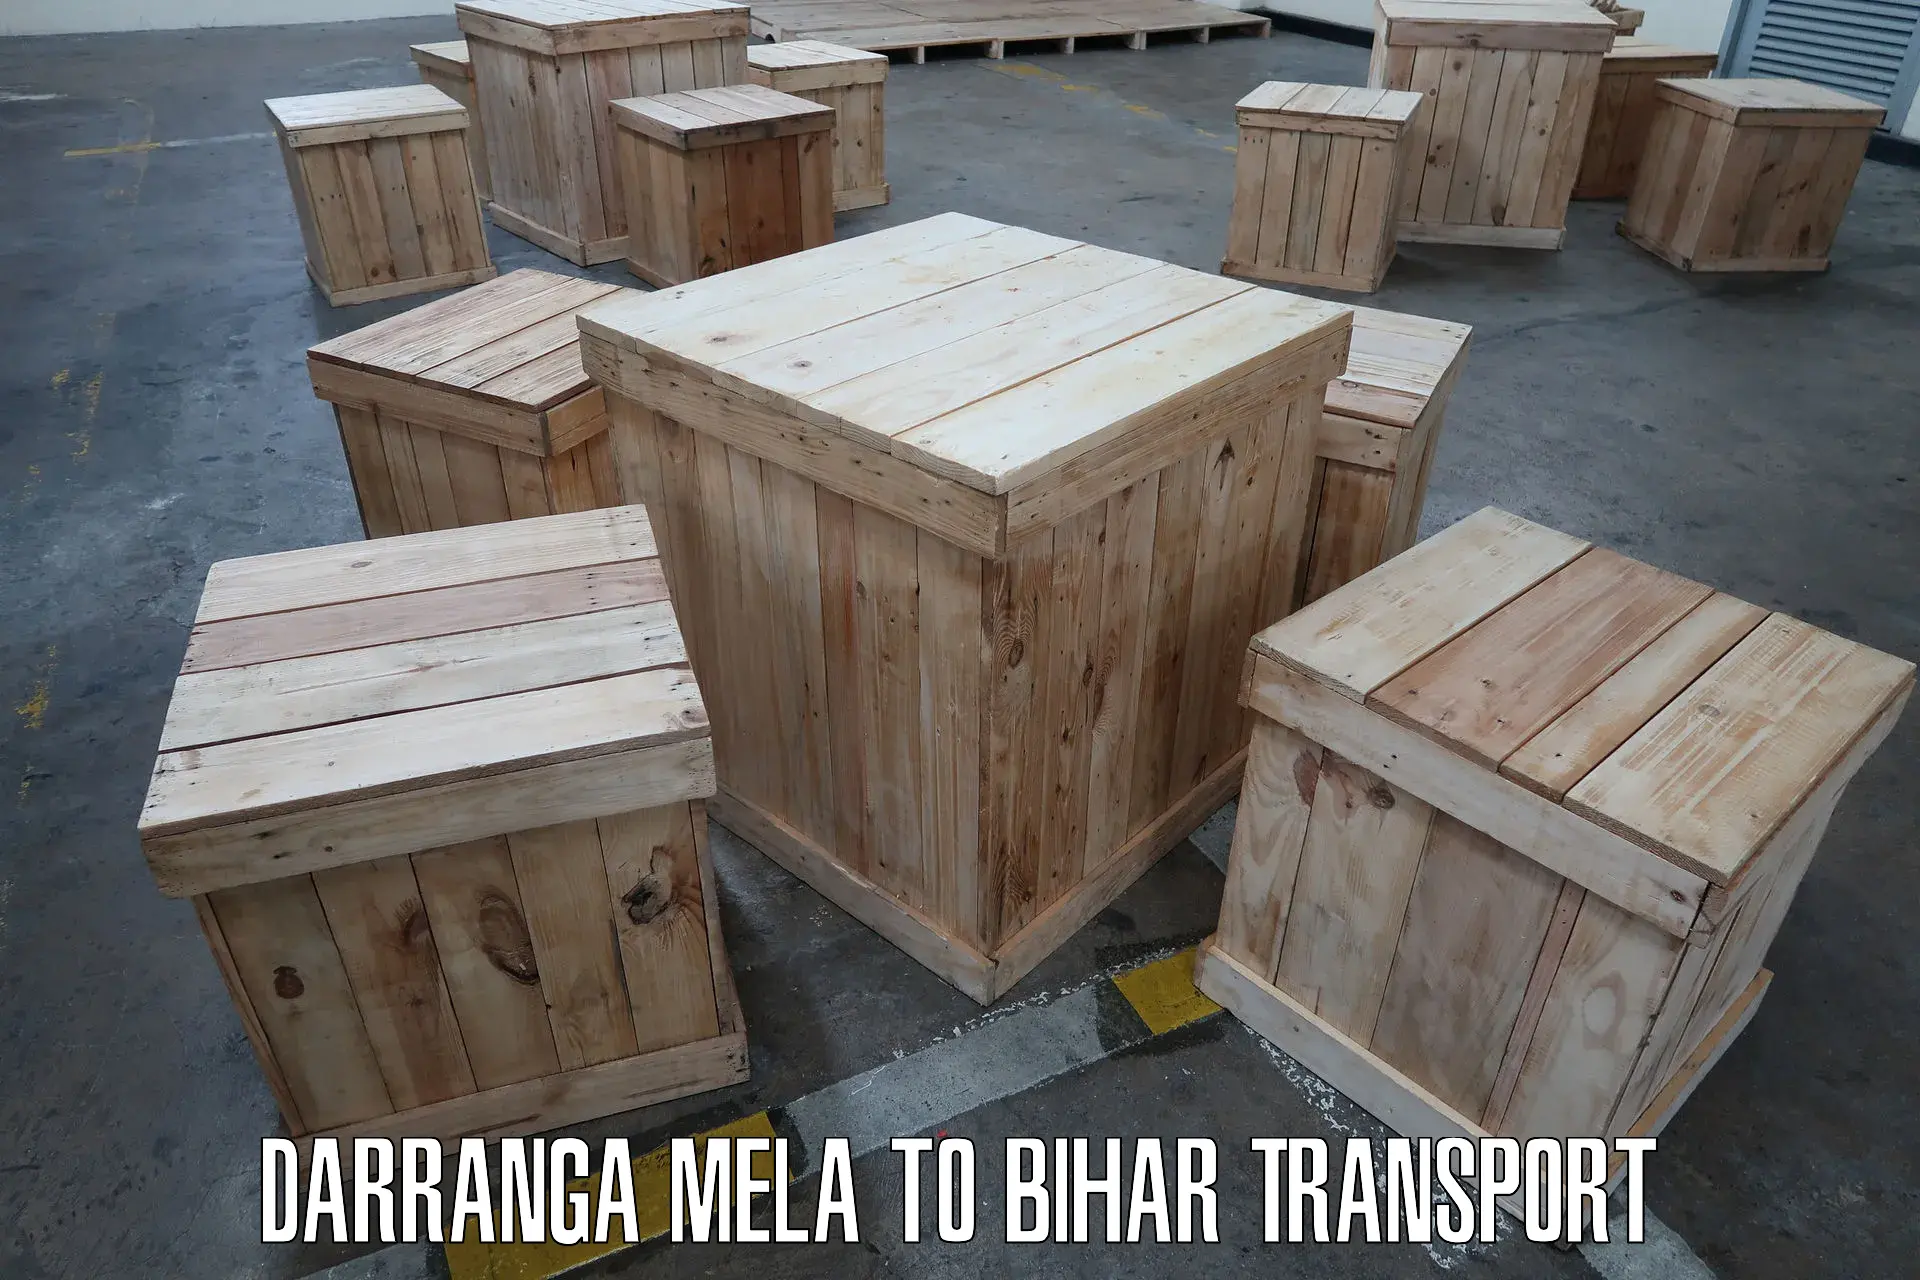 Air freight transport services Darranga Mela to Sirdala